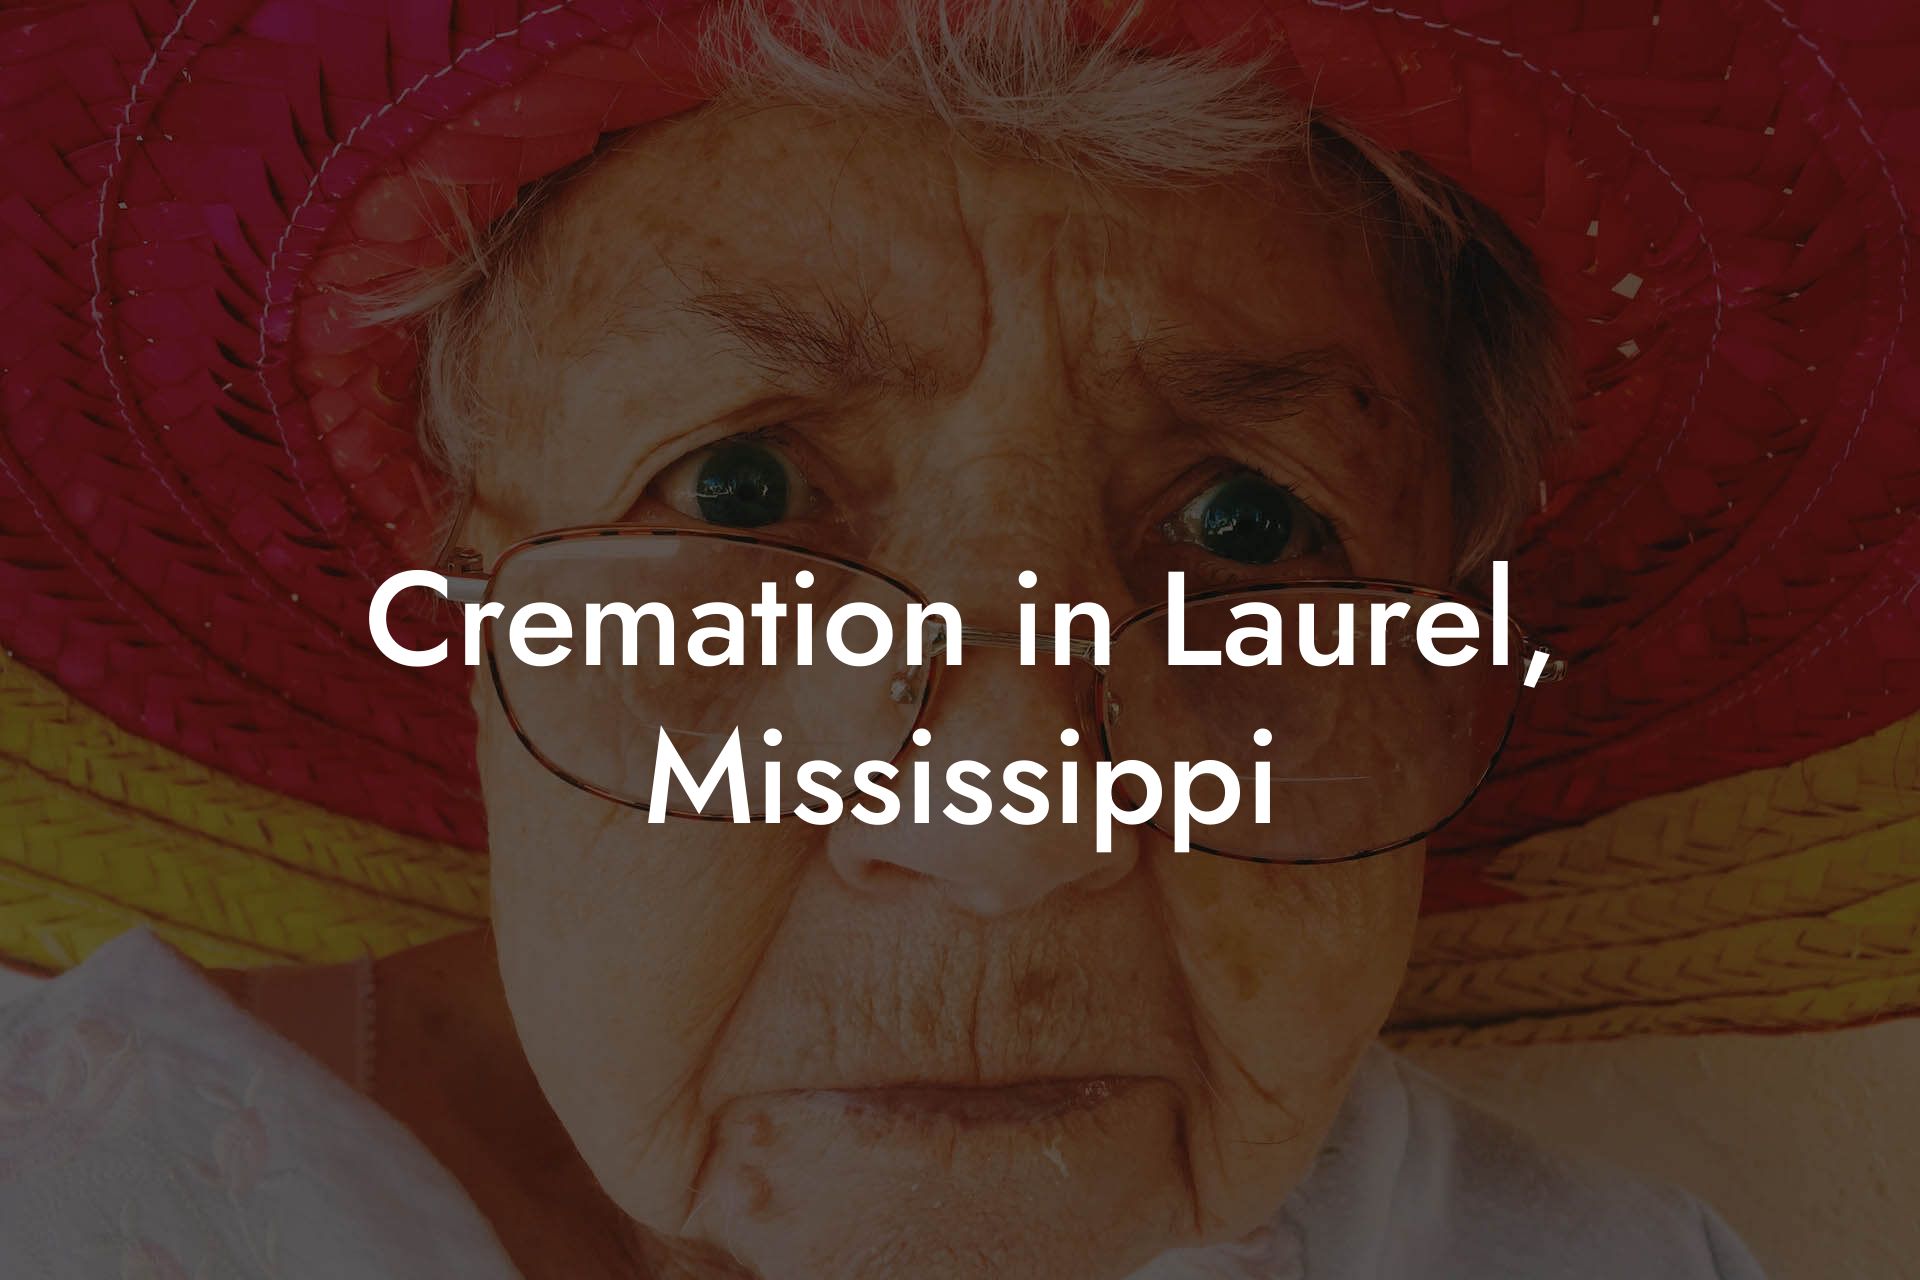 Cremation in Laurel, Mississippi